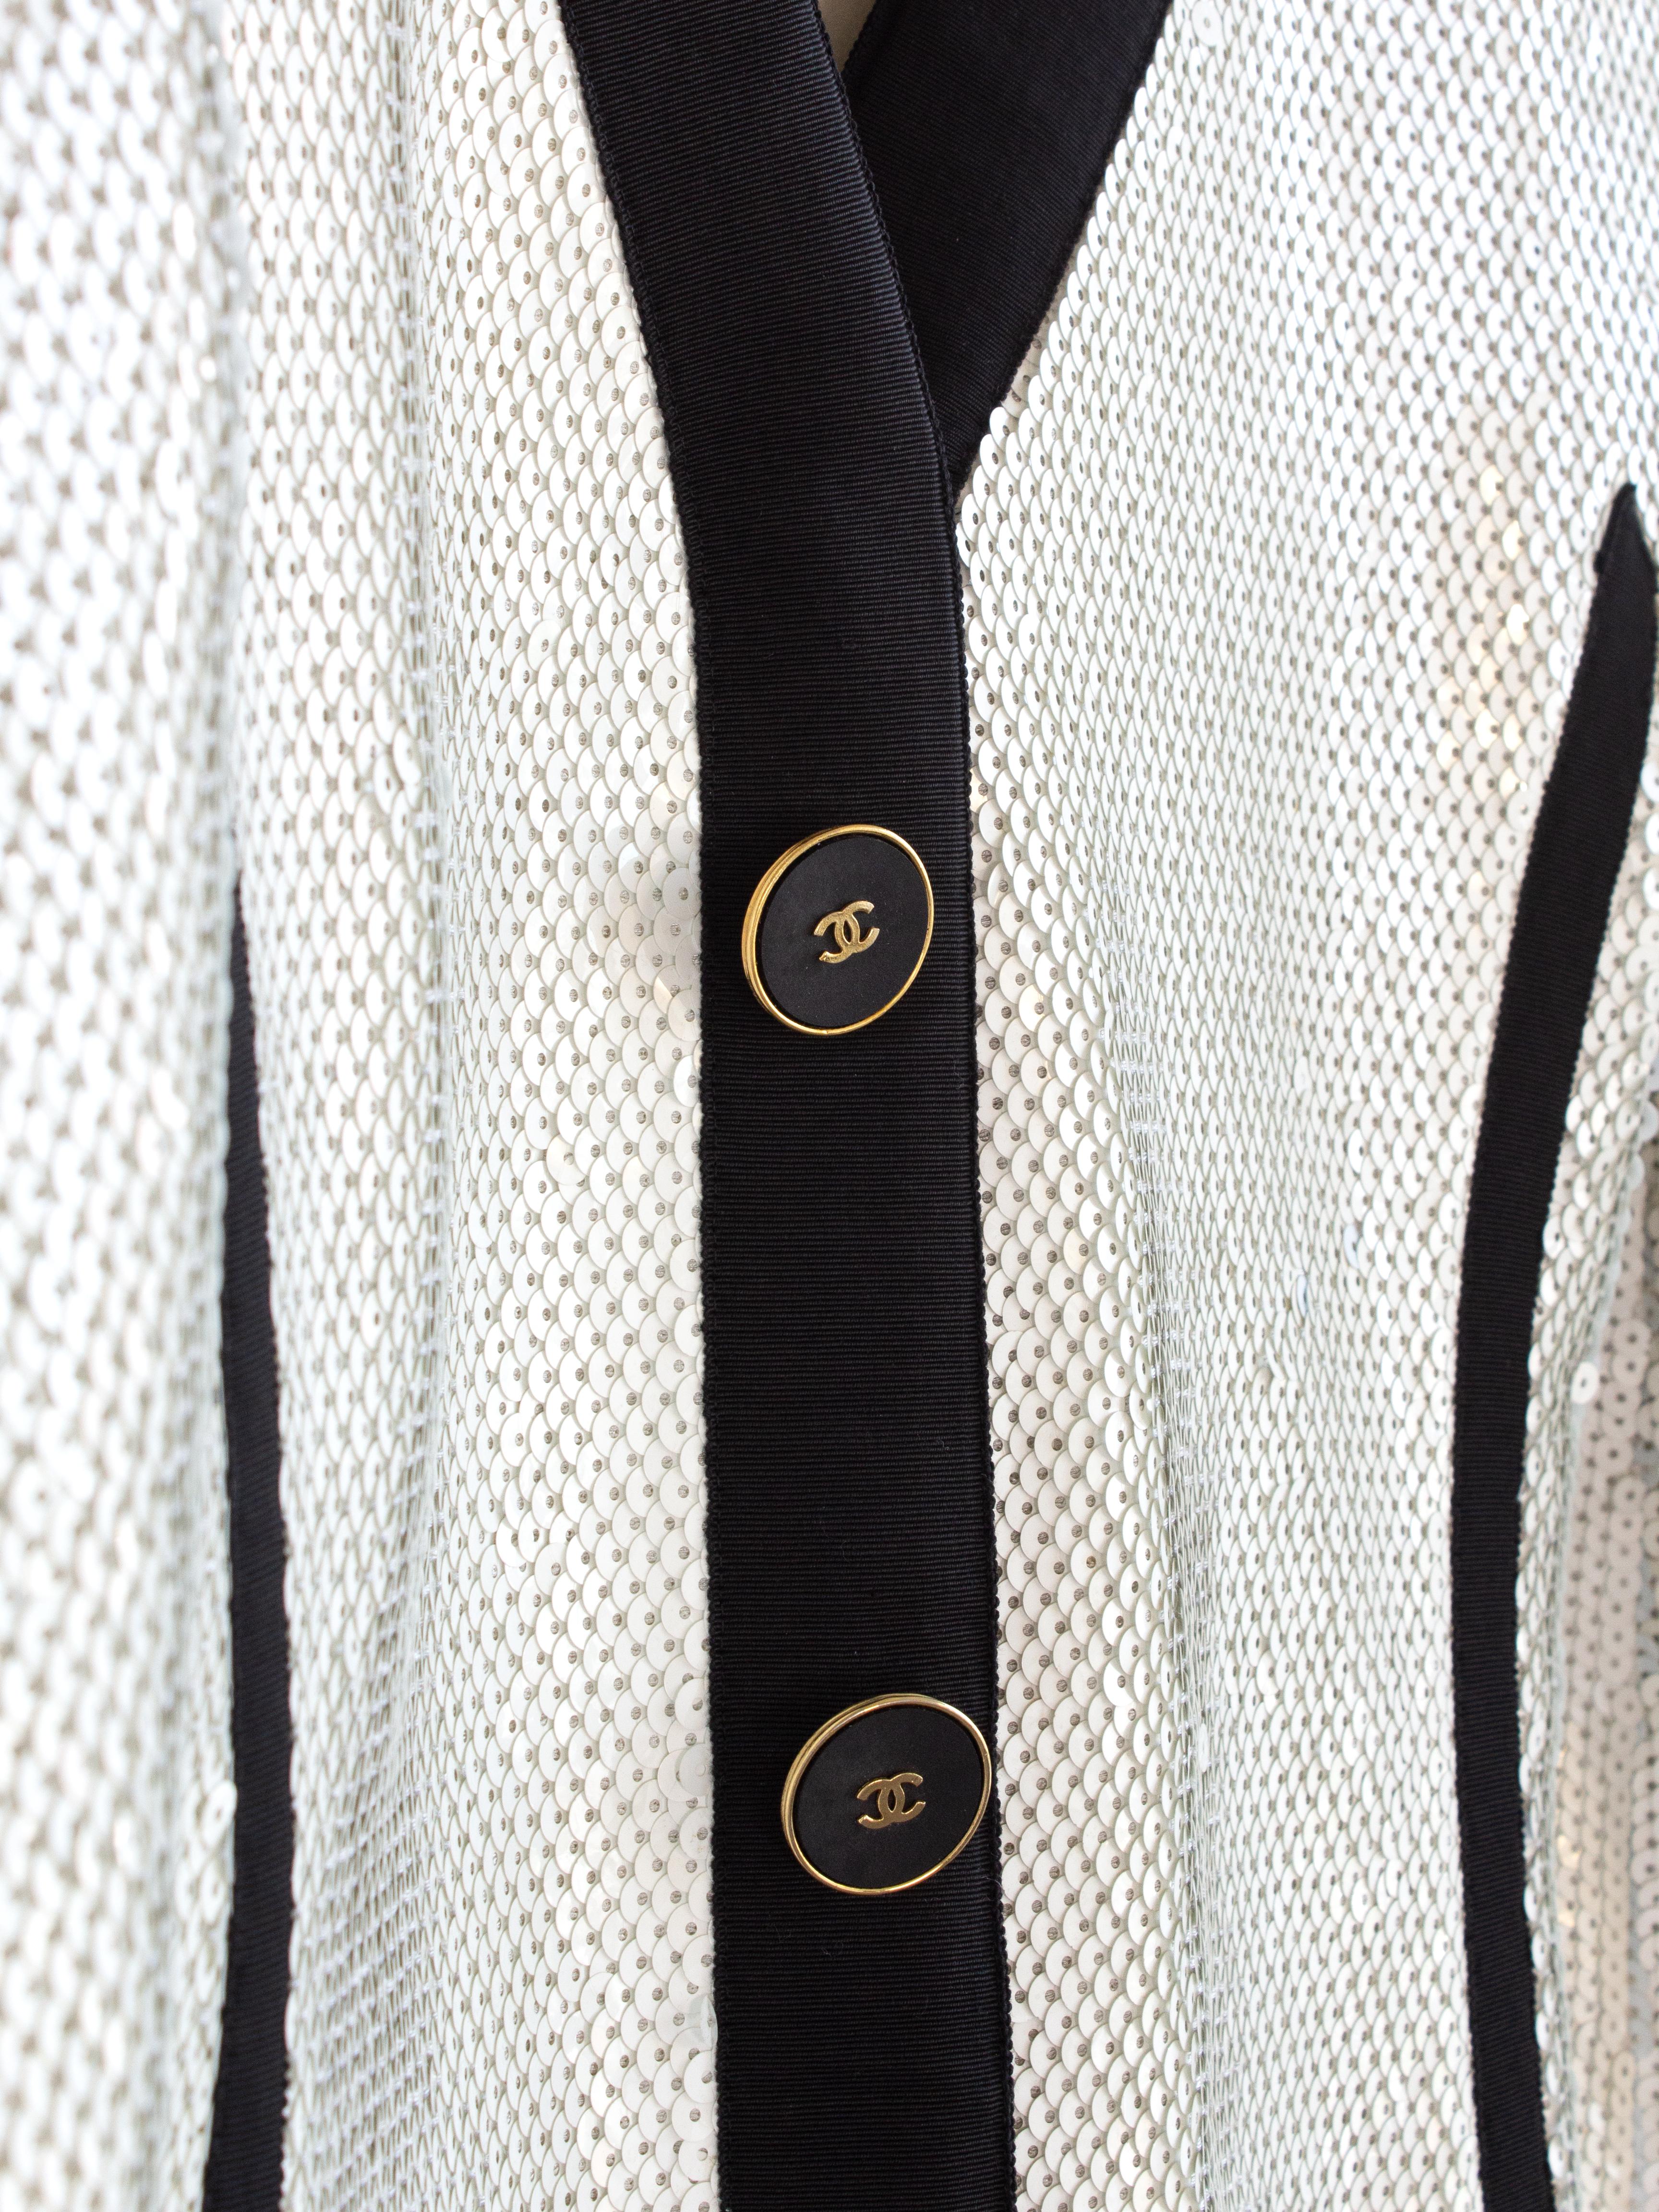 Rare Chanel Vintage S/S 1991 Collector White Black Sequin CC Scuba Jacket 8